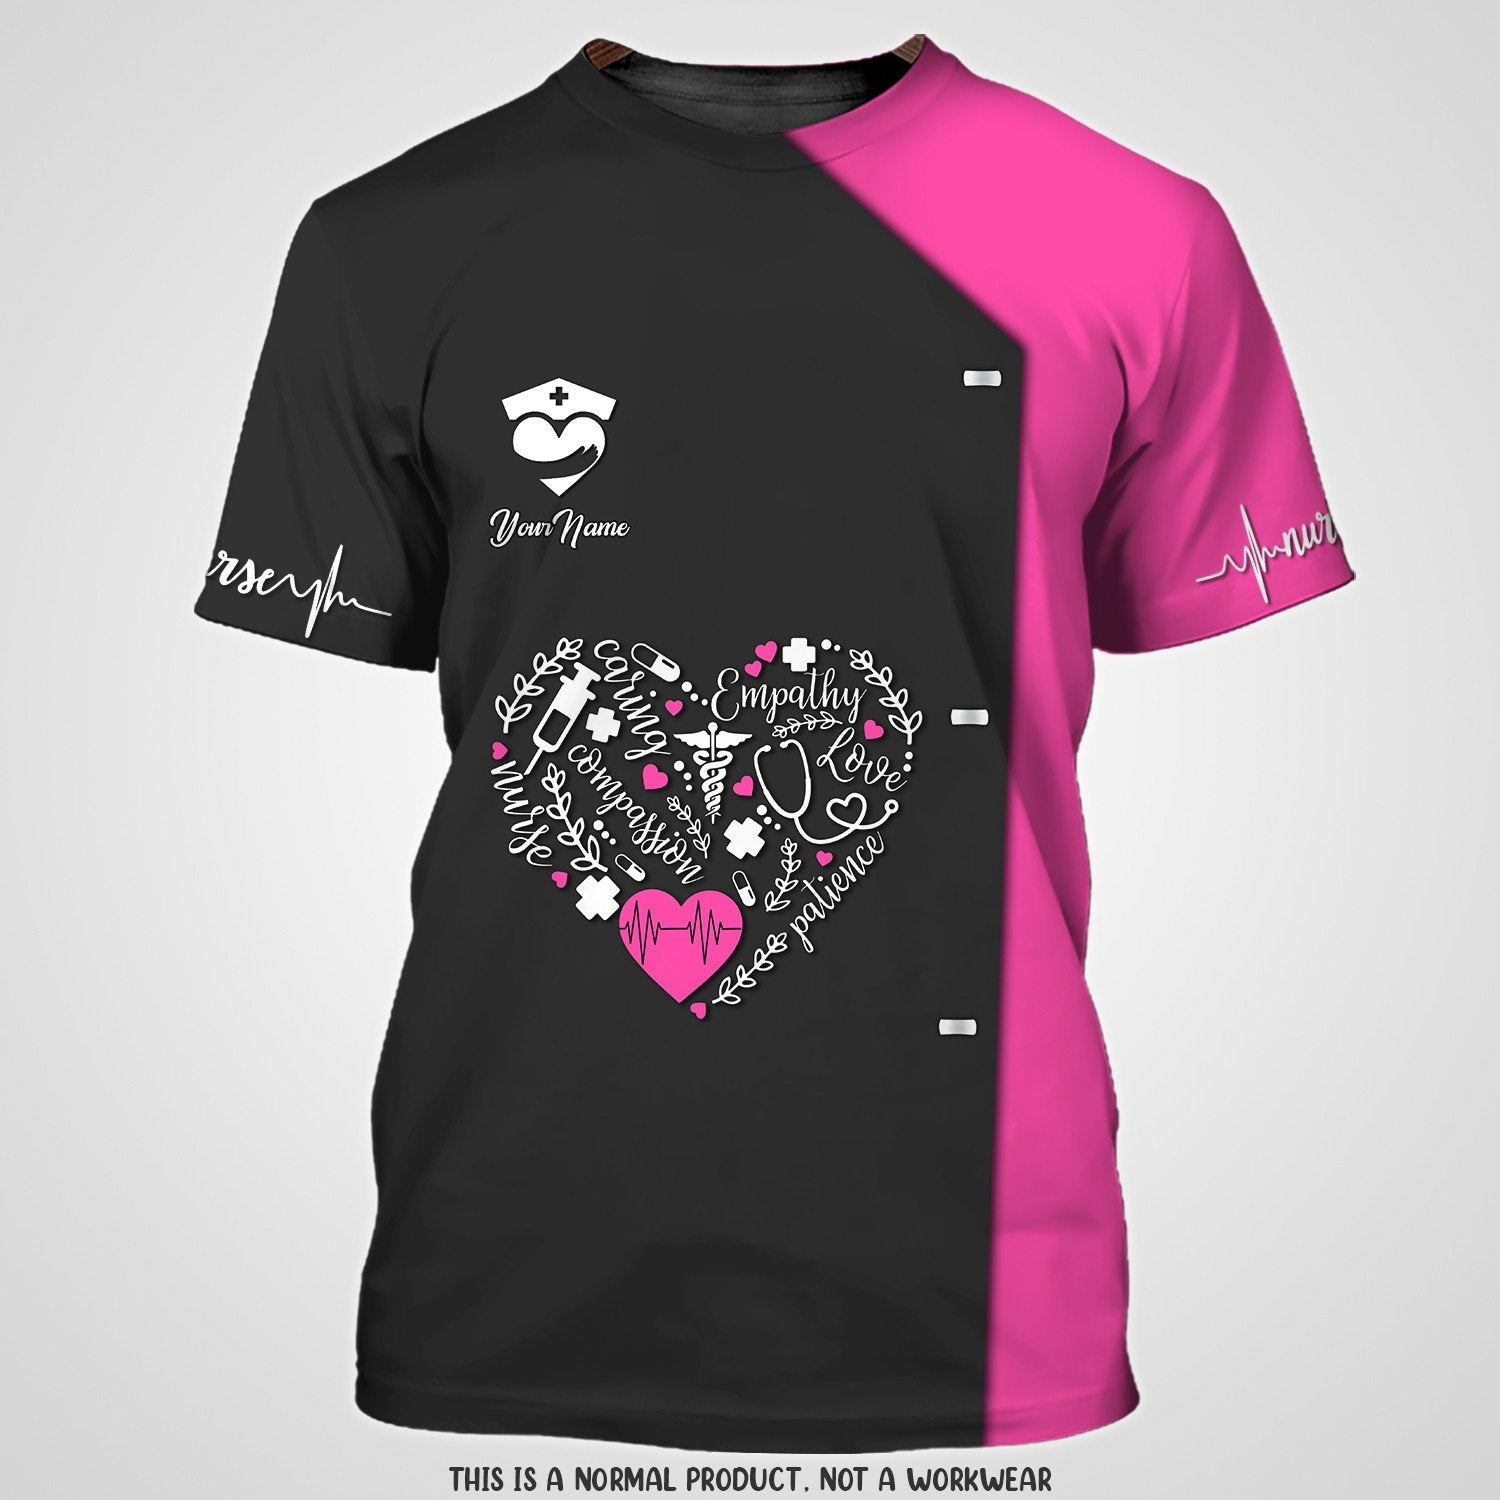 Nurse Heart 3D All Over Print Shirt Custom Medical Tee Shirt Black Pink/ Nurse Uniform Shirt